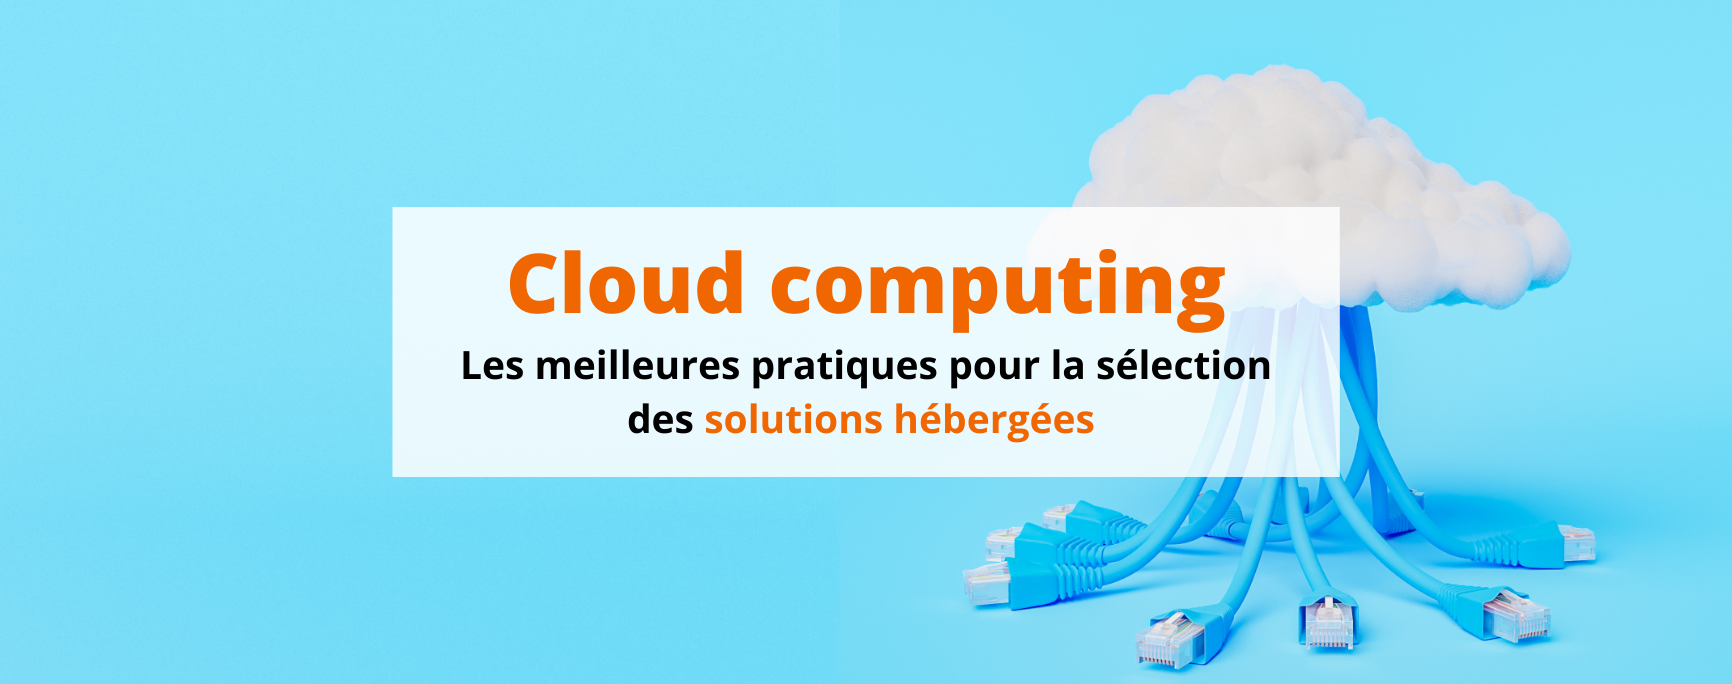 Gouvernance Service SaaS - Cloud computing